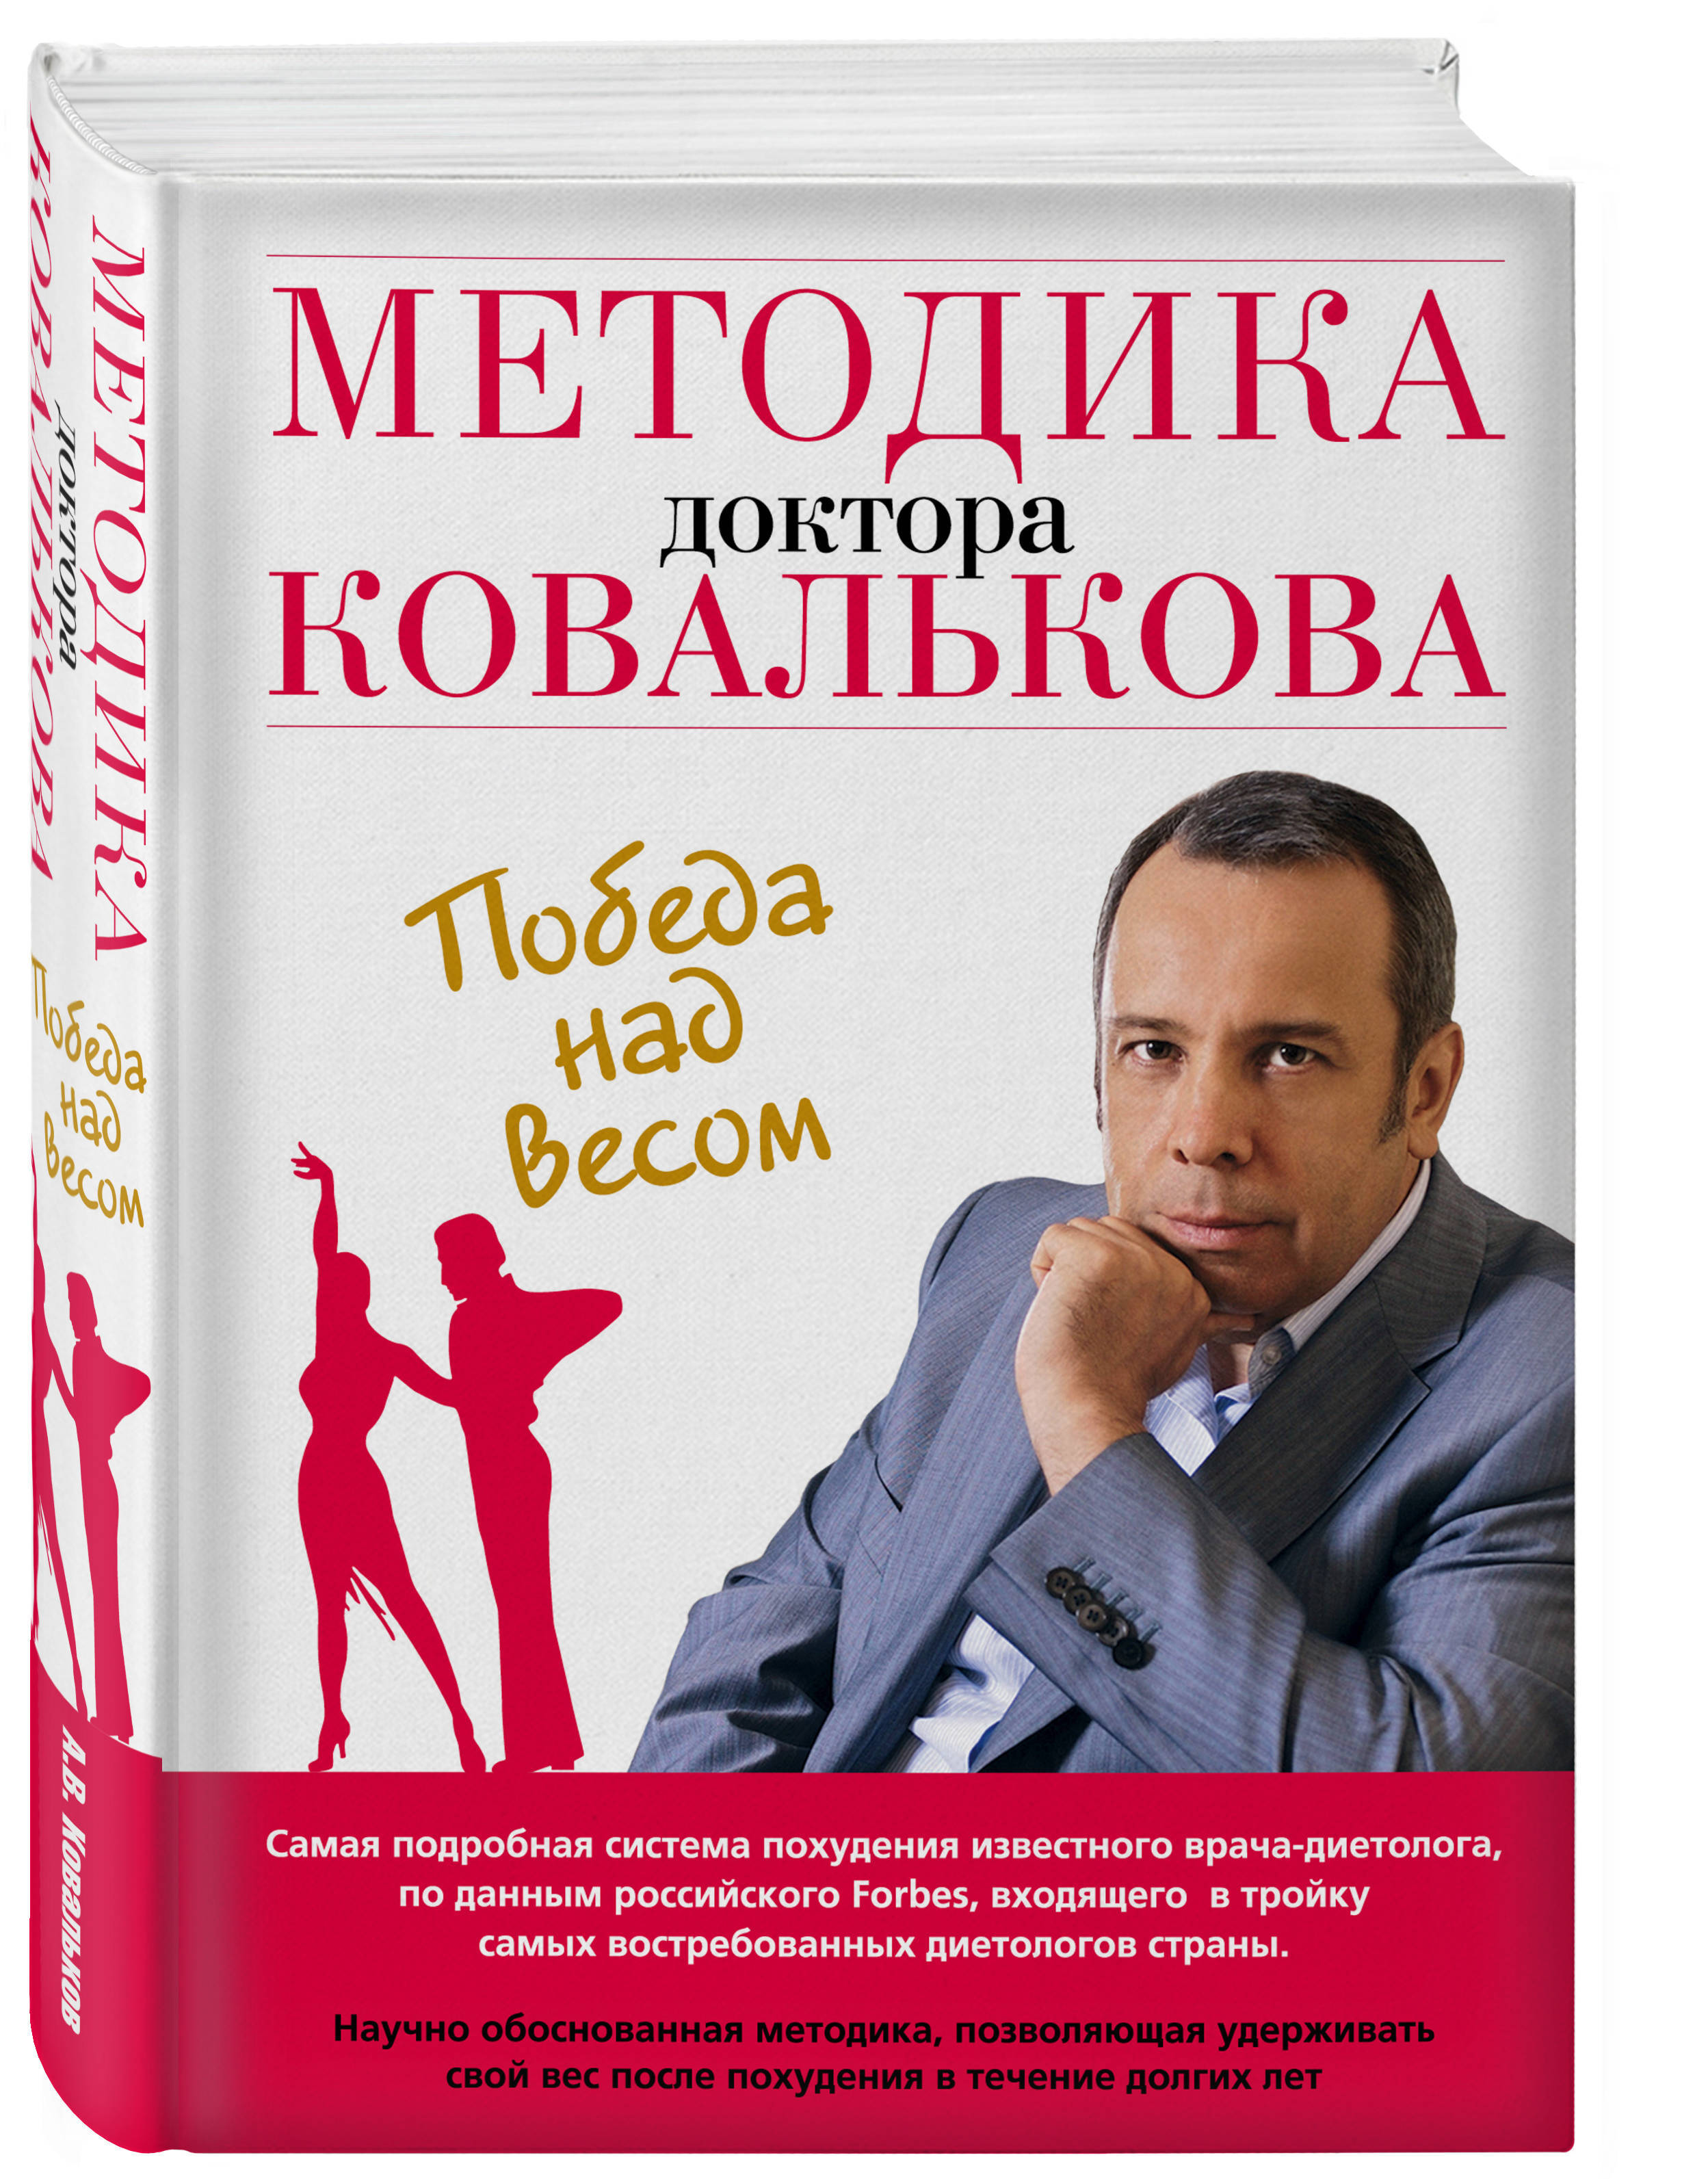 Диета Ковалькова Книга